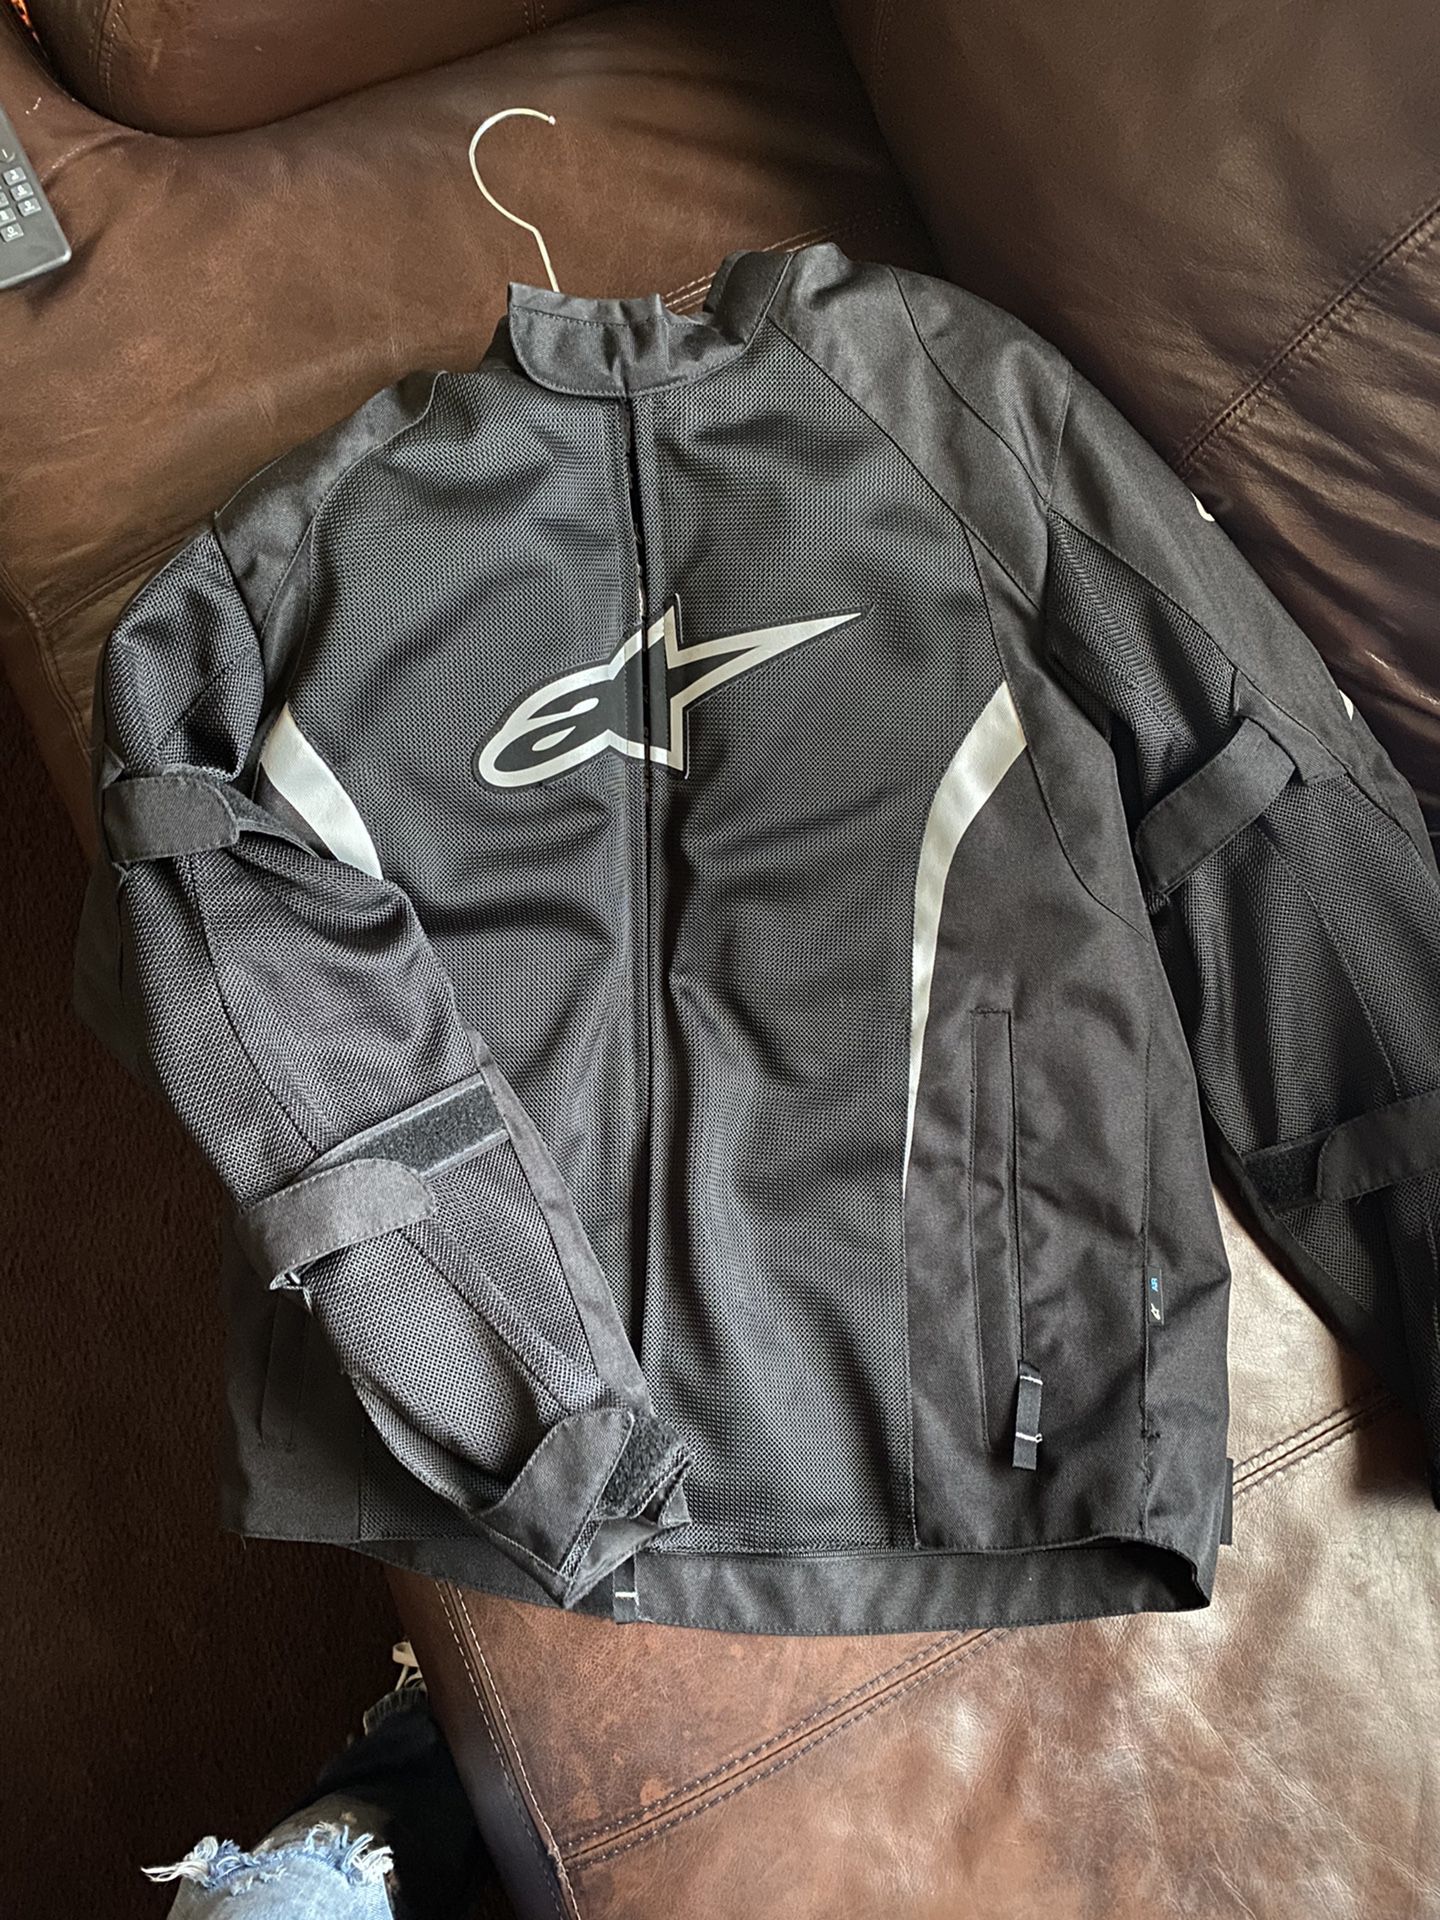 alpinestar motorcycle jacket